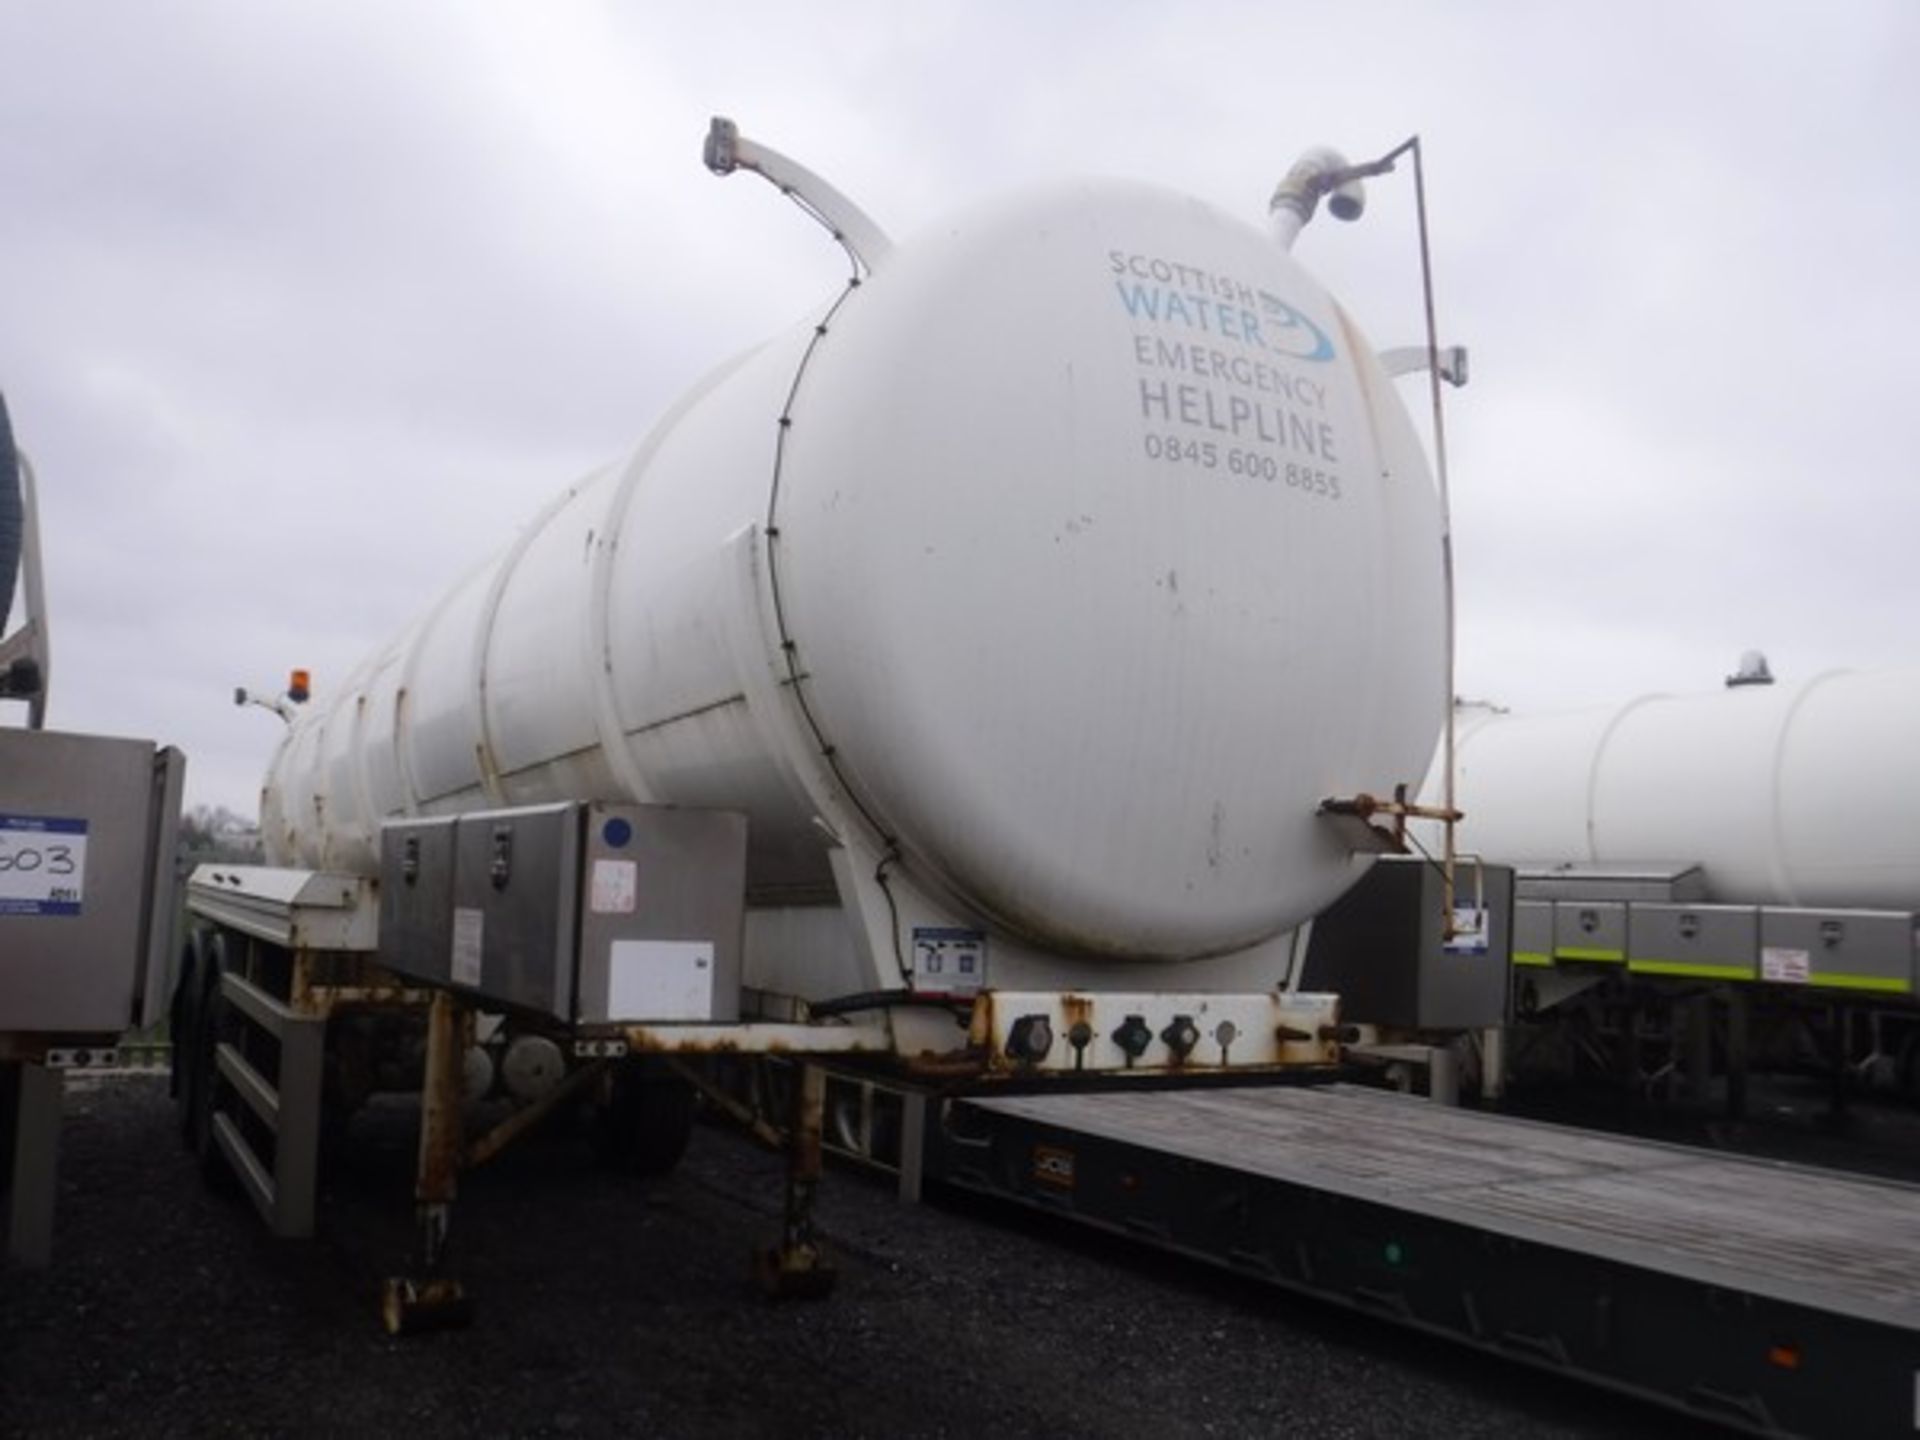 2008 WHALE tanker. 18,000 litre capacity Asset No 2702273. S/N sa 955183280103738